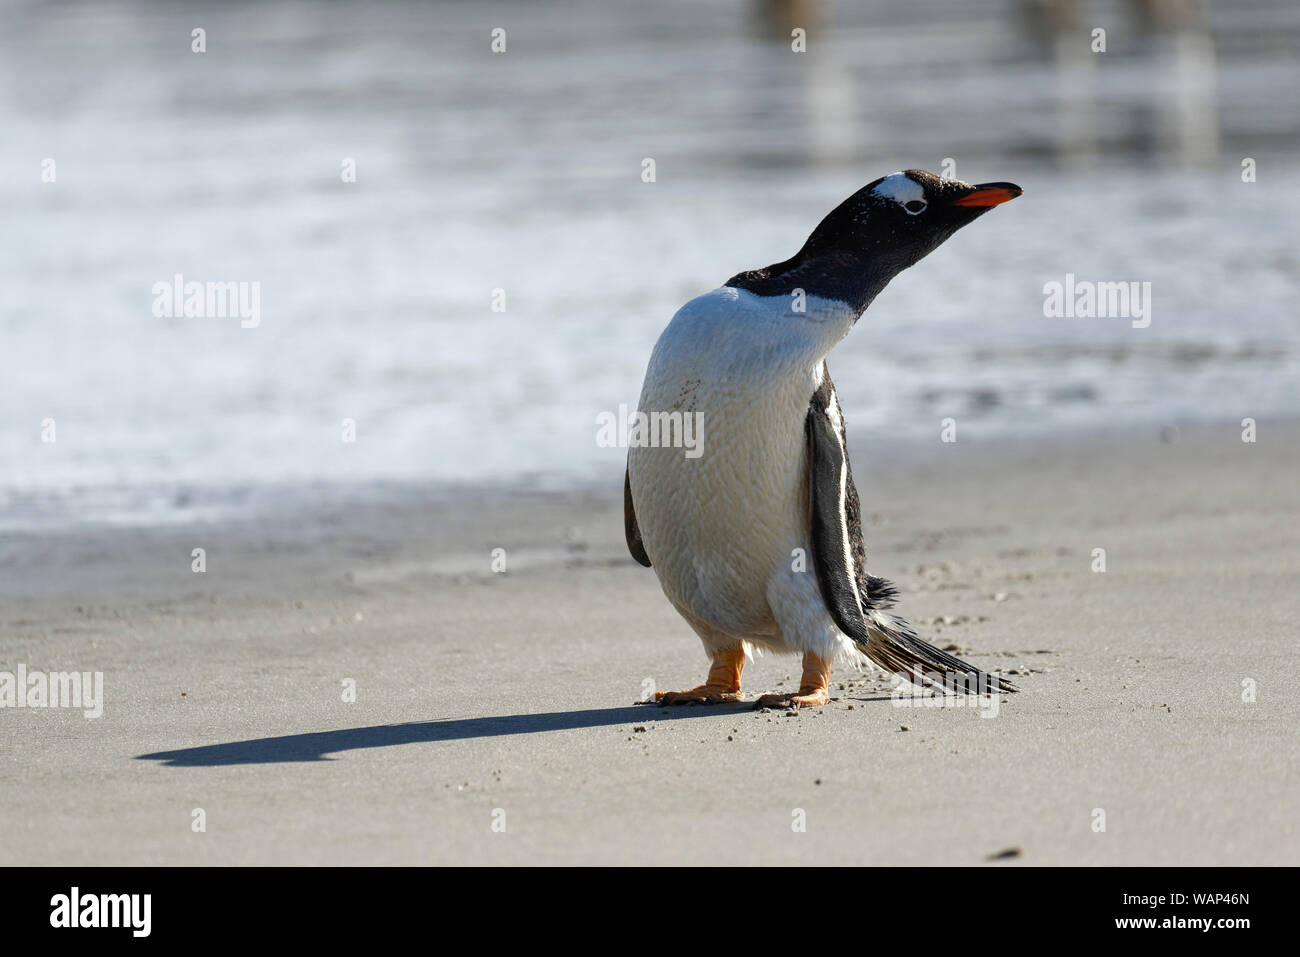 Eselspinguine (Pygoscelis papua) am Strand, Falkland Inseln. Gentoo penguin on the beach, Falkland Islands Stock Photo